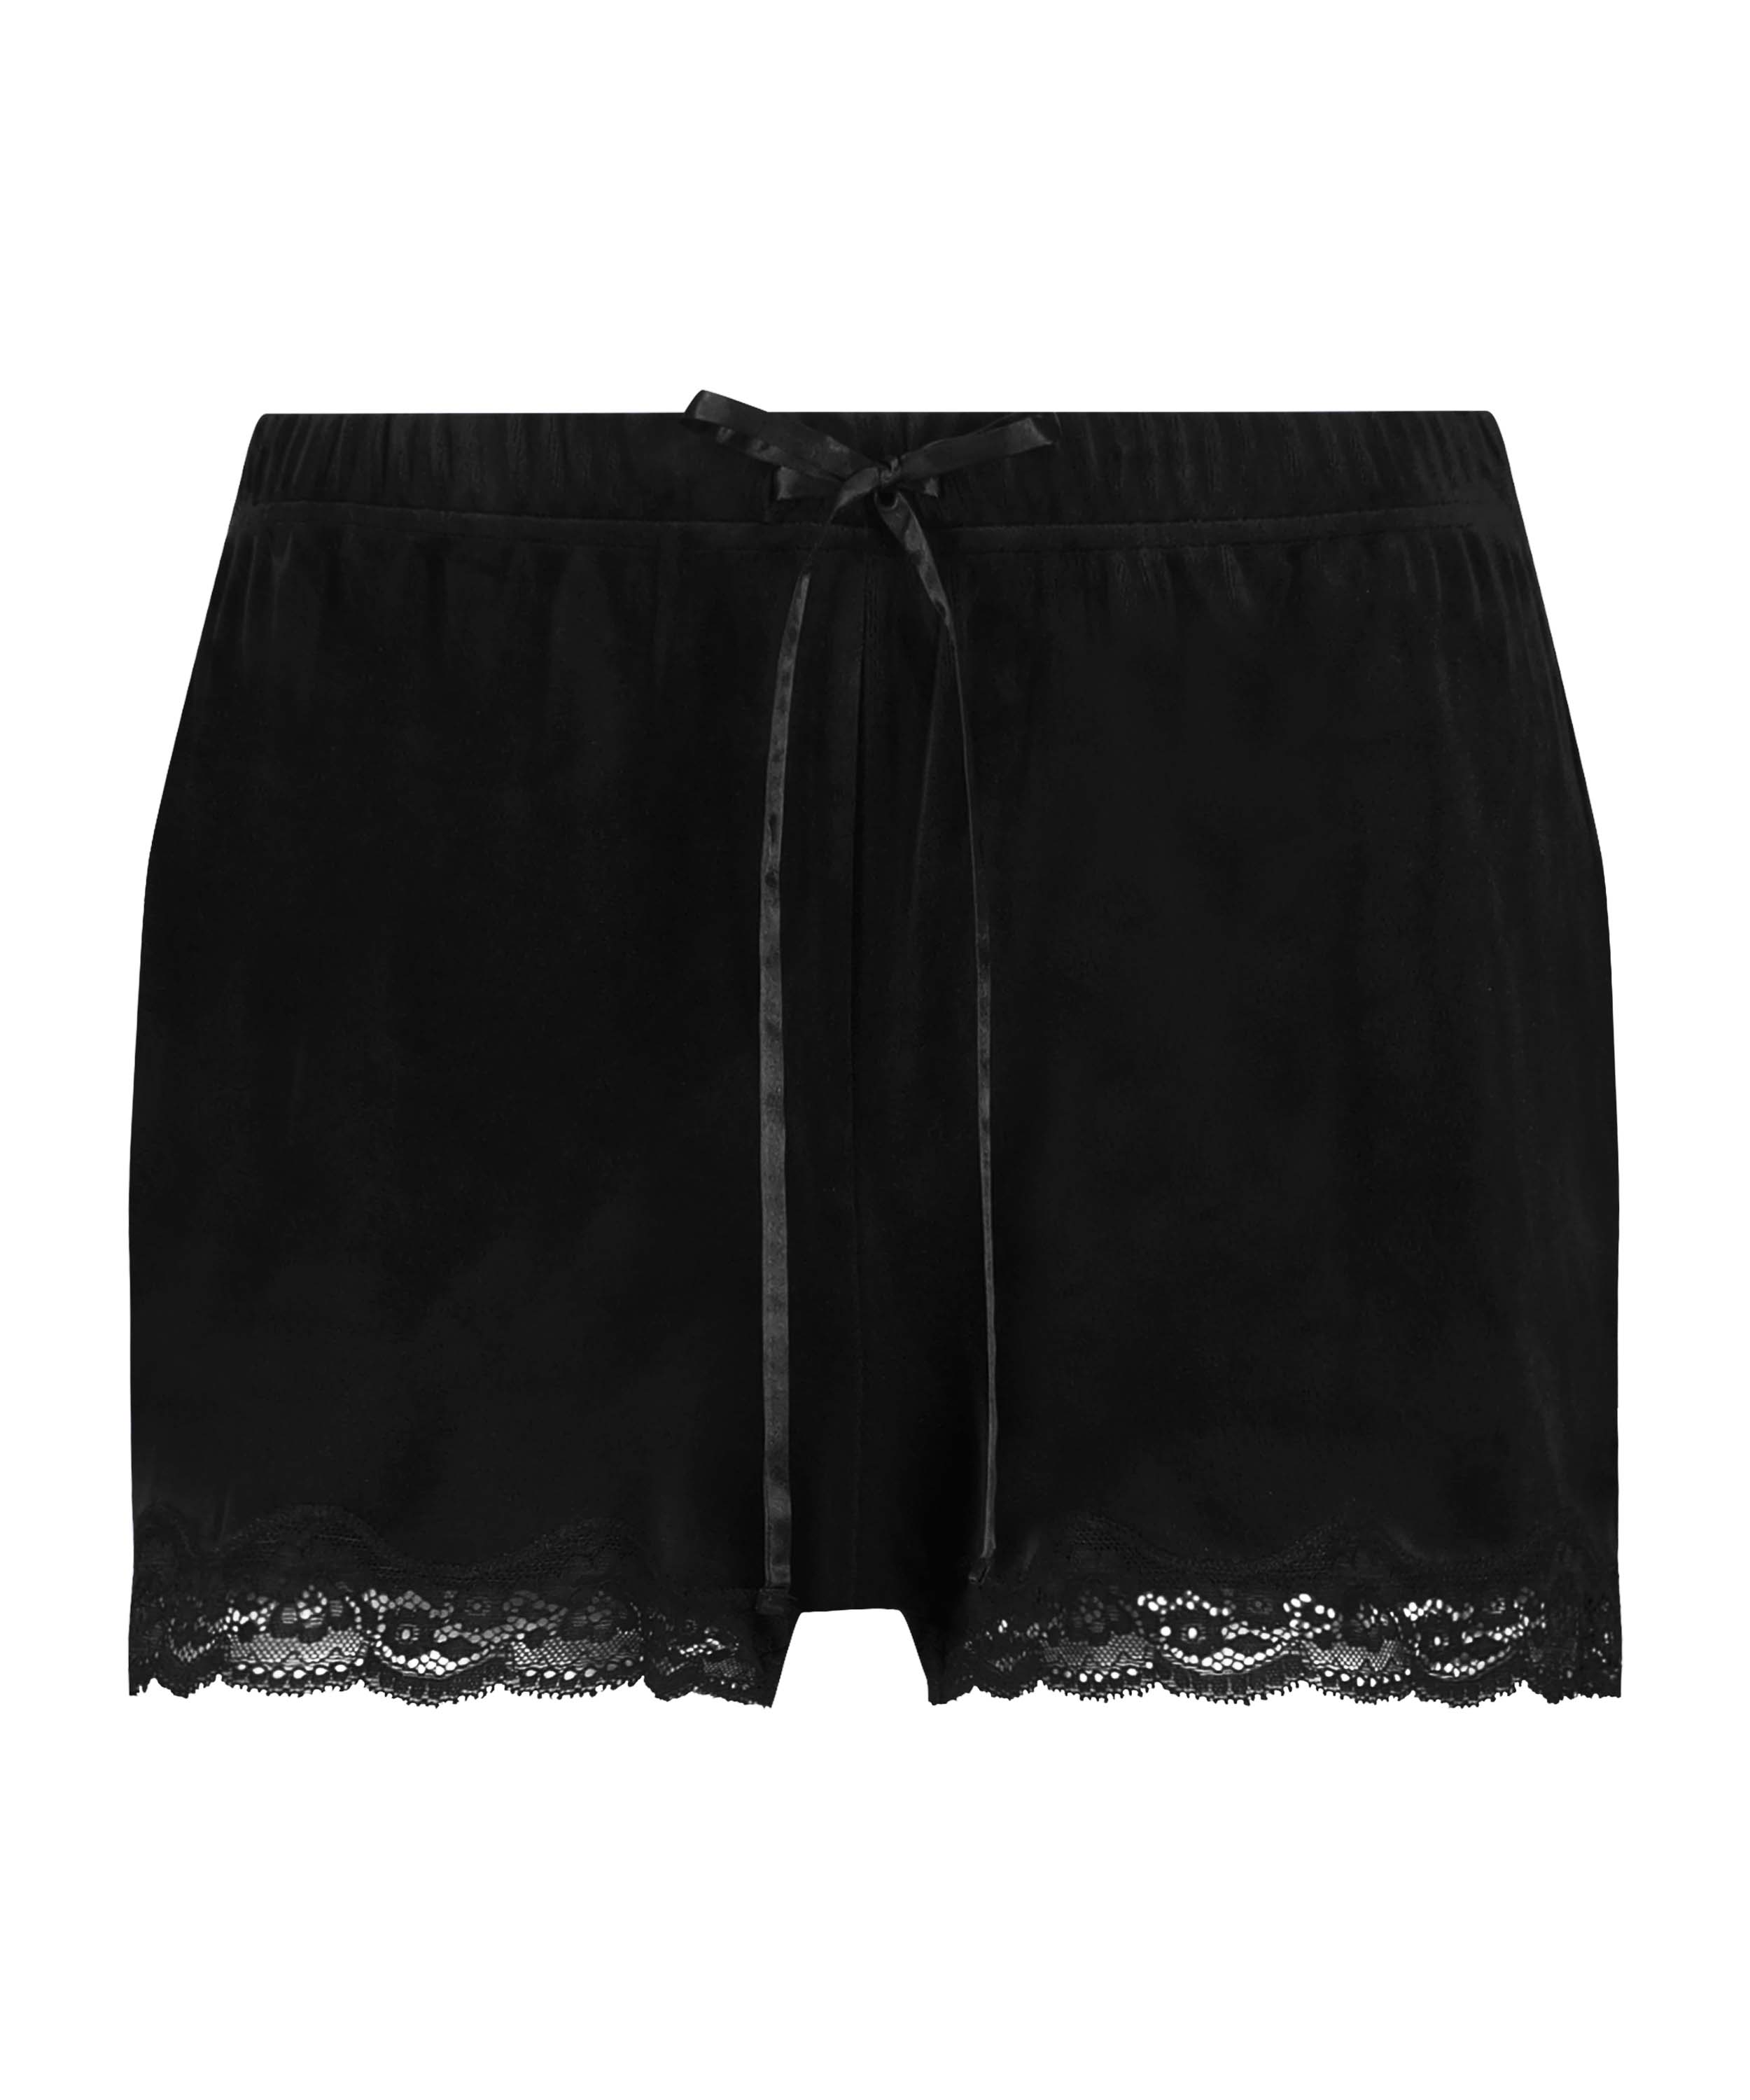 Velvet lace shorts for €24.99 - Pajama Pants - Hunkemöller